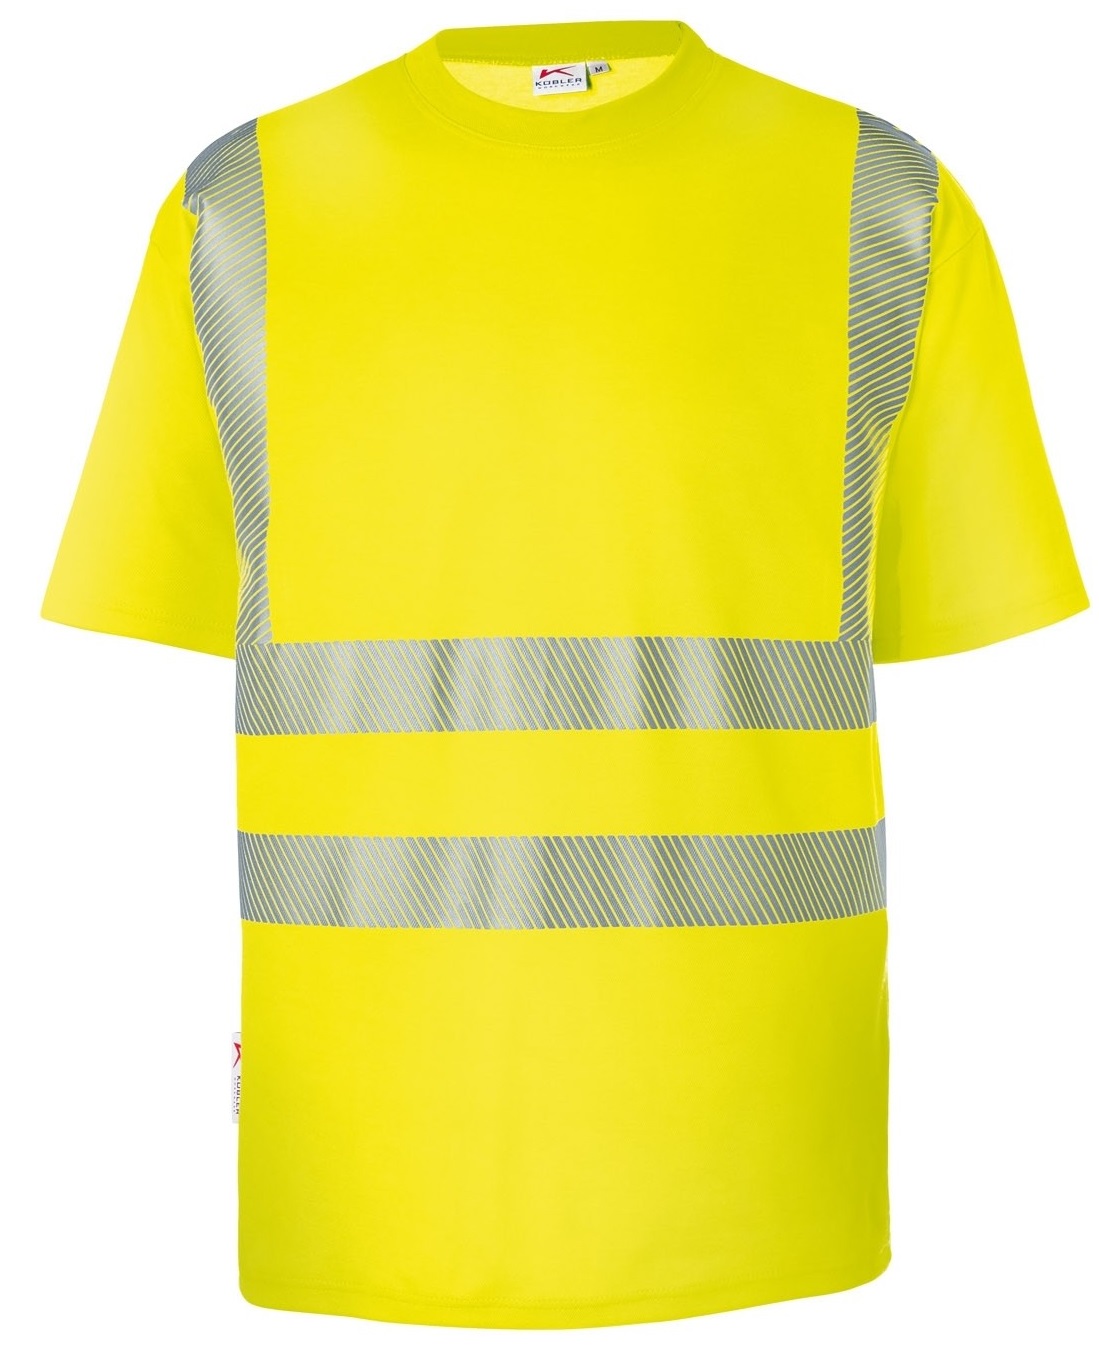 KÜBLER-Warnschutz, Warn-T-Shirt, REFLECTIQ, PSA 2, ca.180g/m², warngelb
